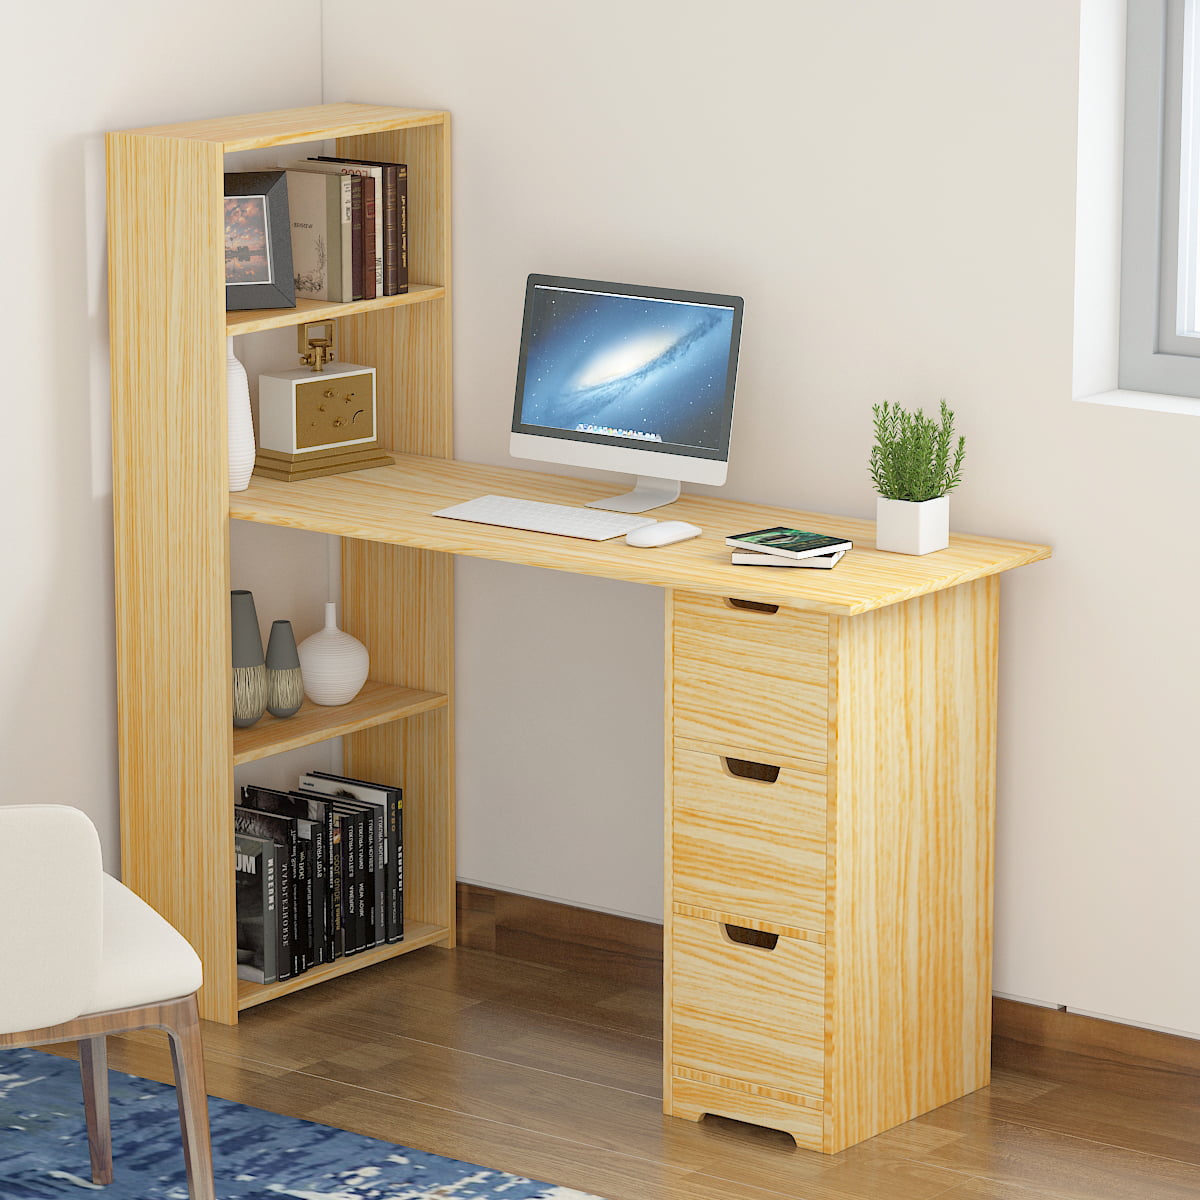  Stylish Desks with Simple Decor